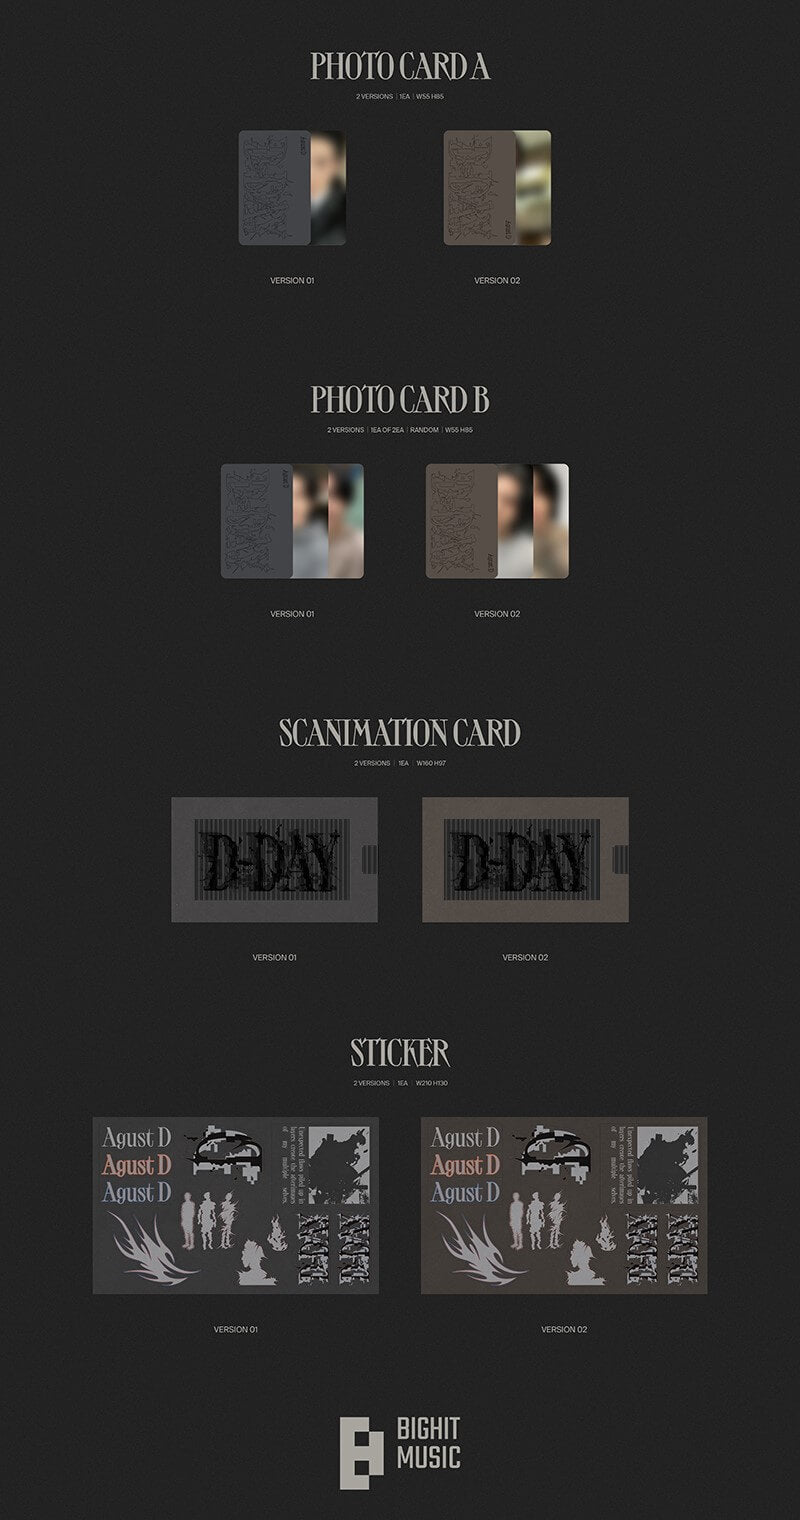 Agust D Solo Album D-DAY Inclusions Photocard A Photocard B Scanimation Card Sticker